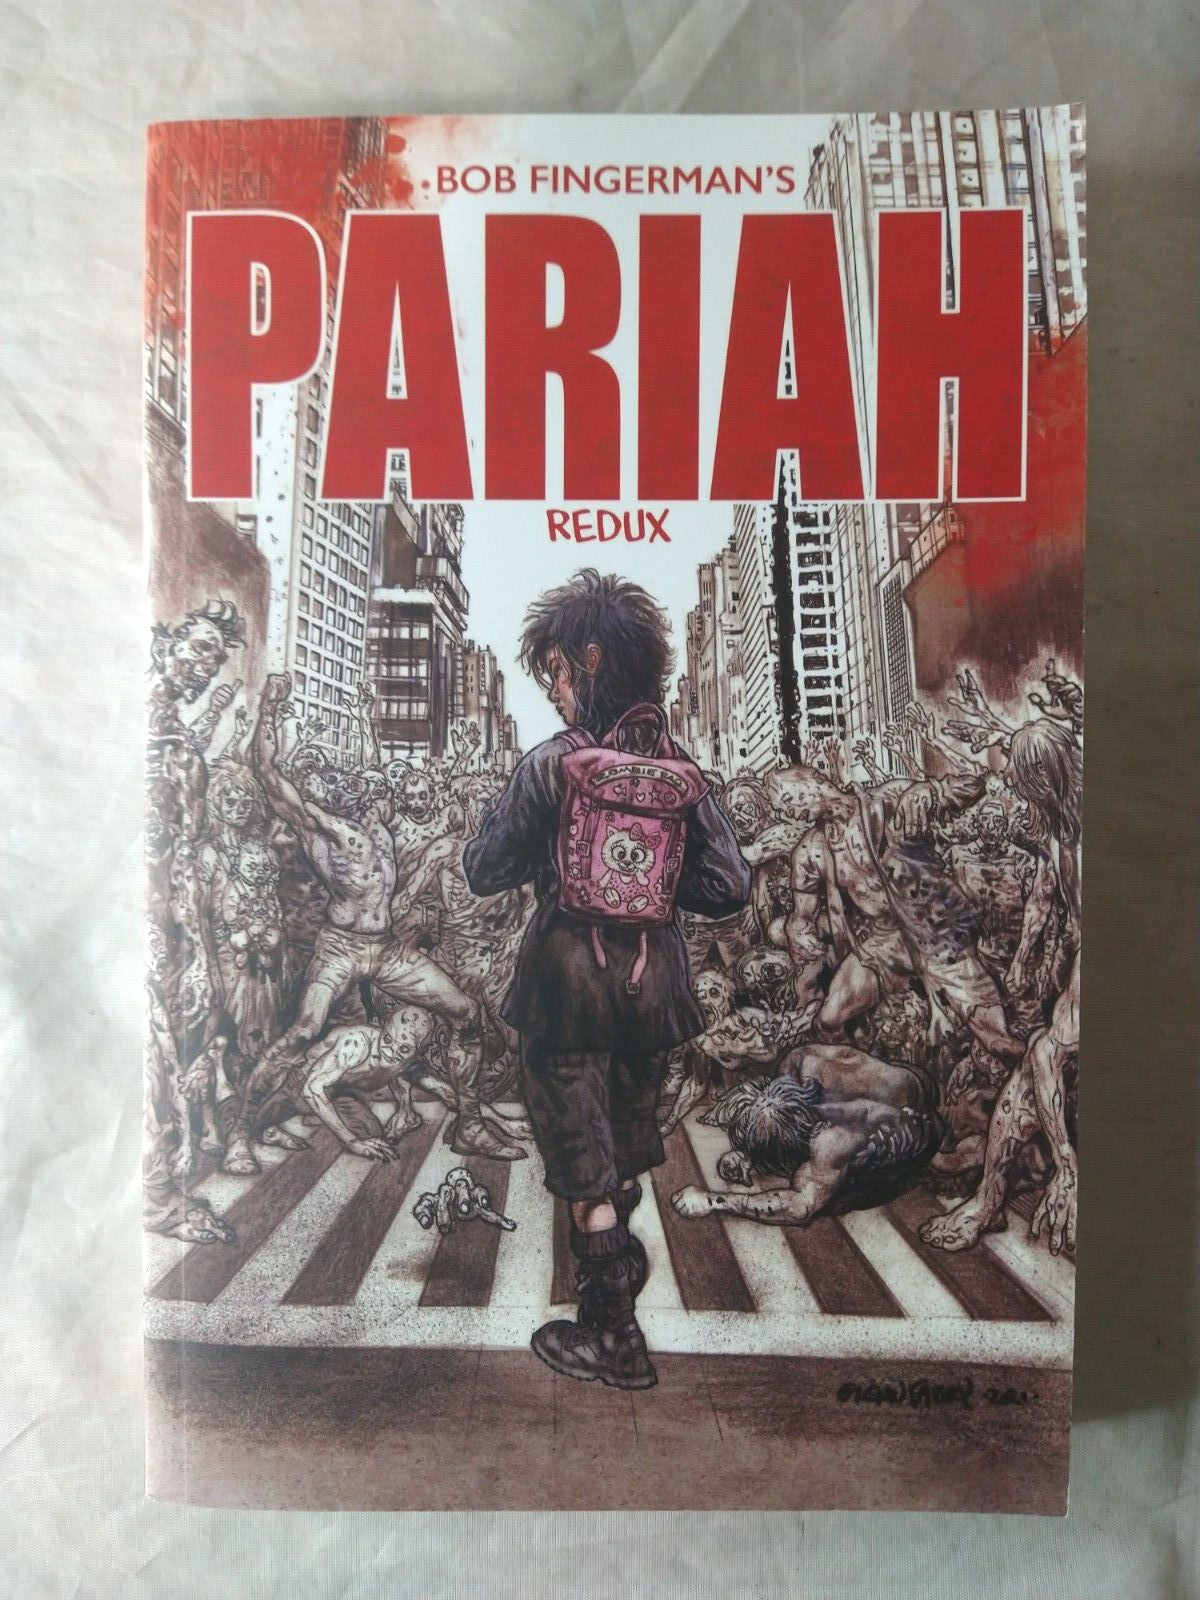 Pariah Redux by Bob Fingerman Paperback Heavy Metal